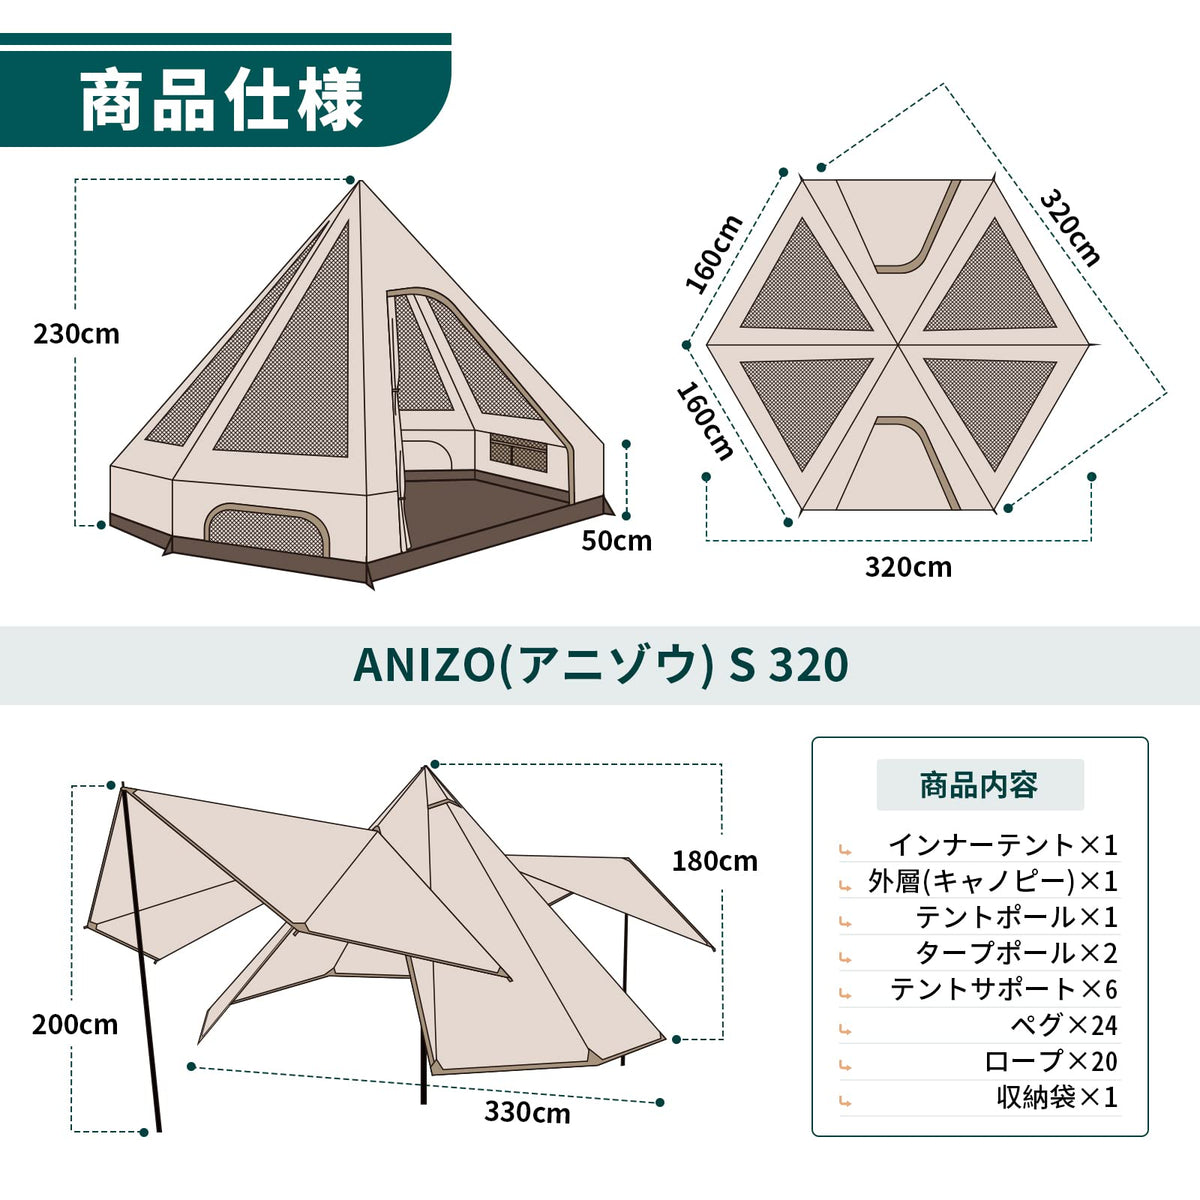 ANIZO（アニゾウ）変形自在4in1 超軽量・大空間ベルテント 簡単設営 2 